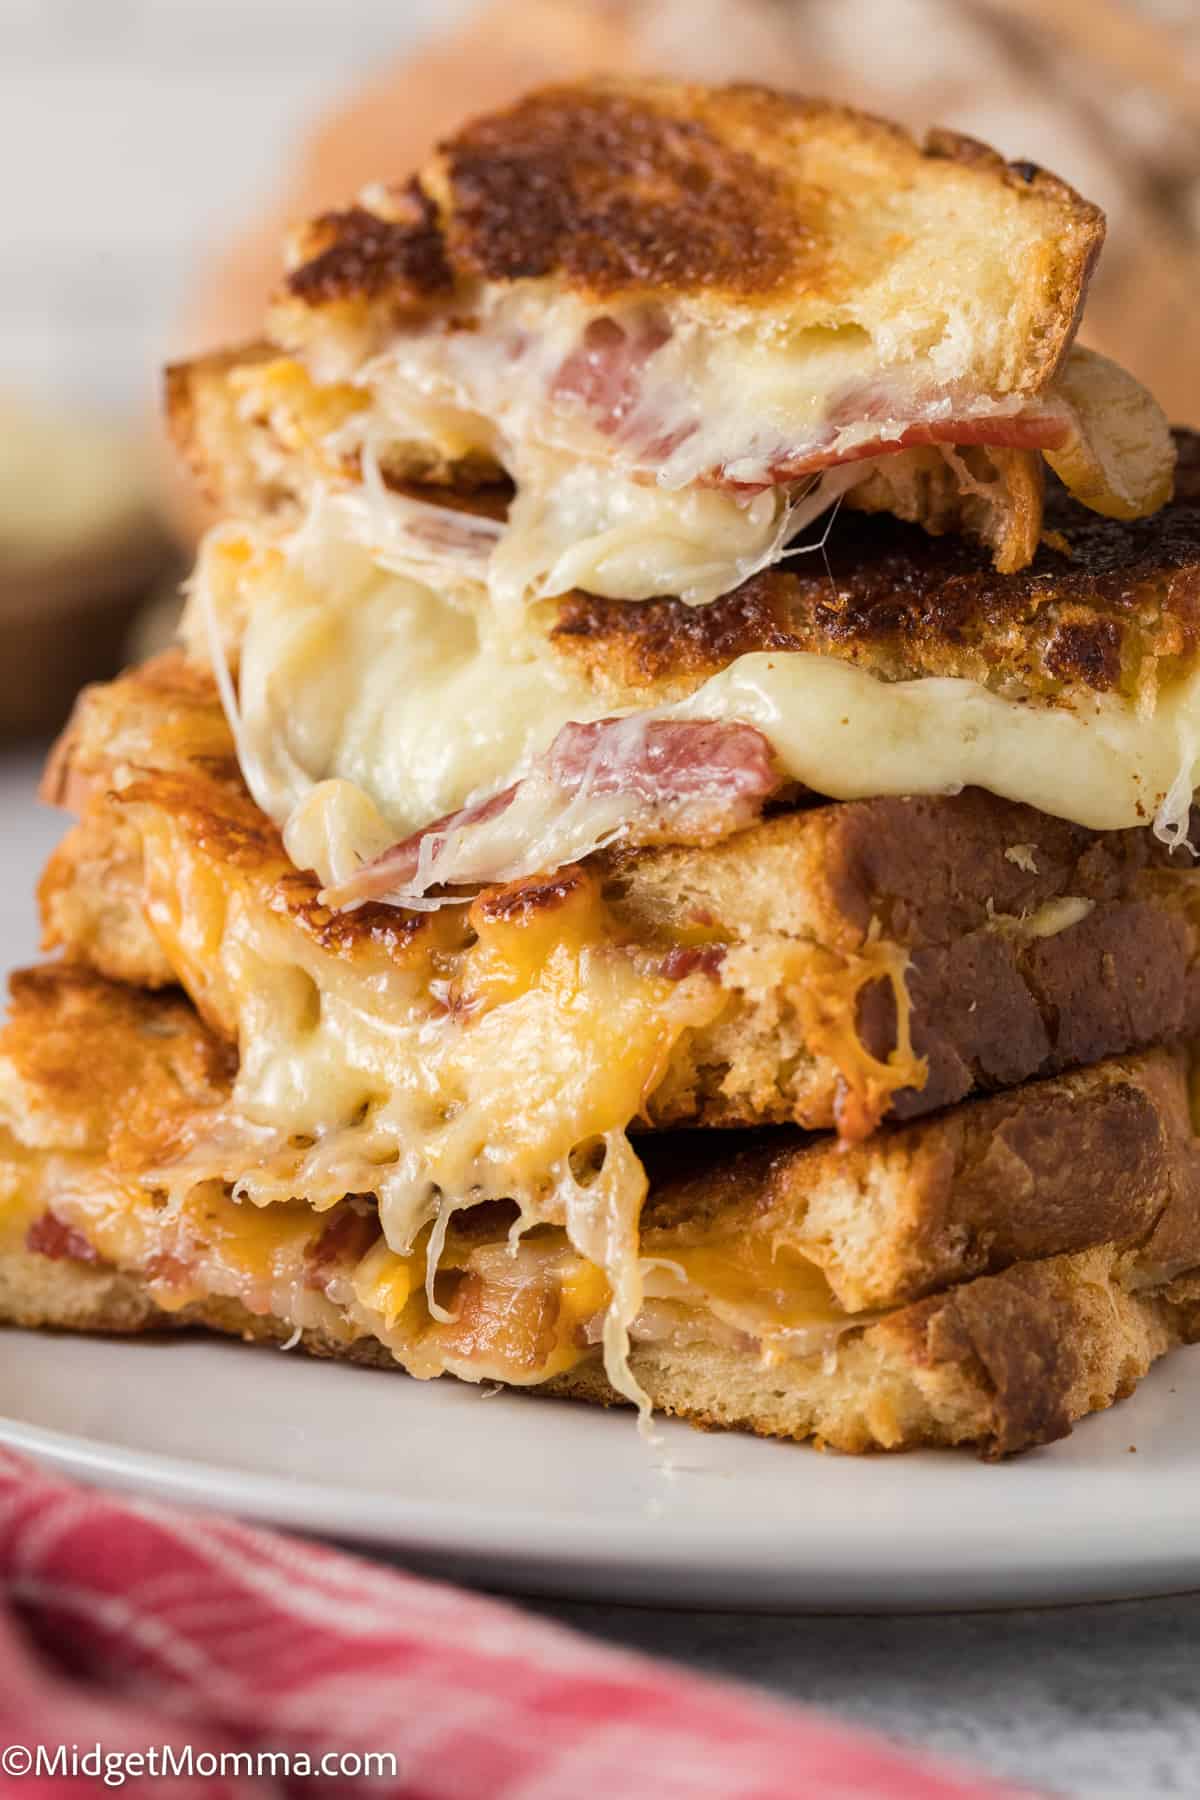 https://www.midgetmomma.com/wp-content/uploads/2023/01/Bacon-Grilled-Cheese-Sandwich-Recipe-18.jpg